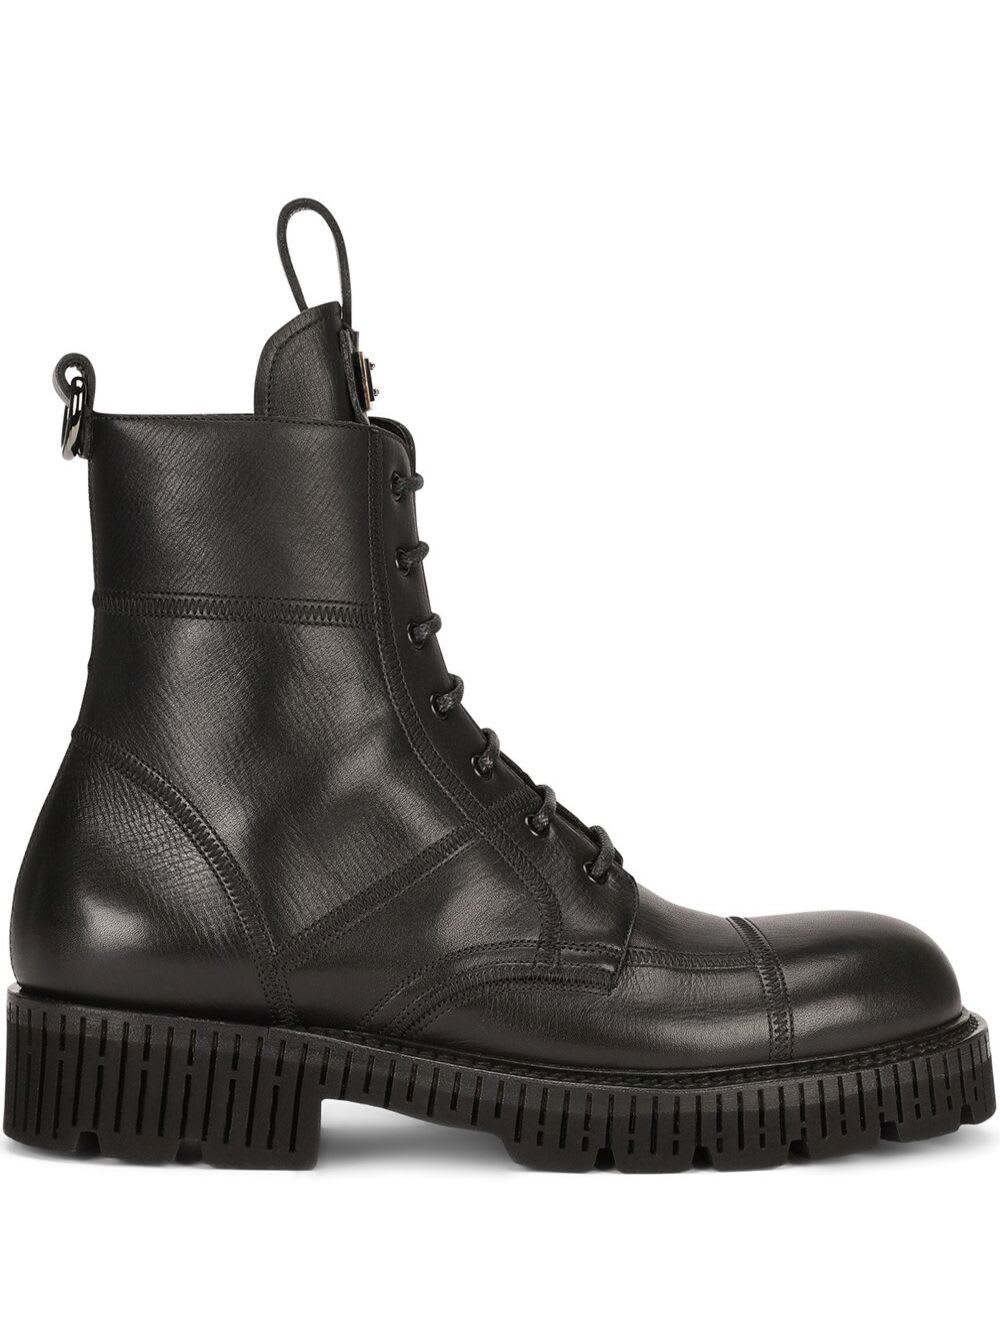 Dolce & Gabbana Black Leather Bernini Boots